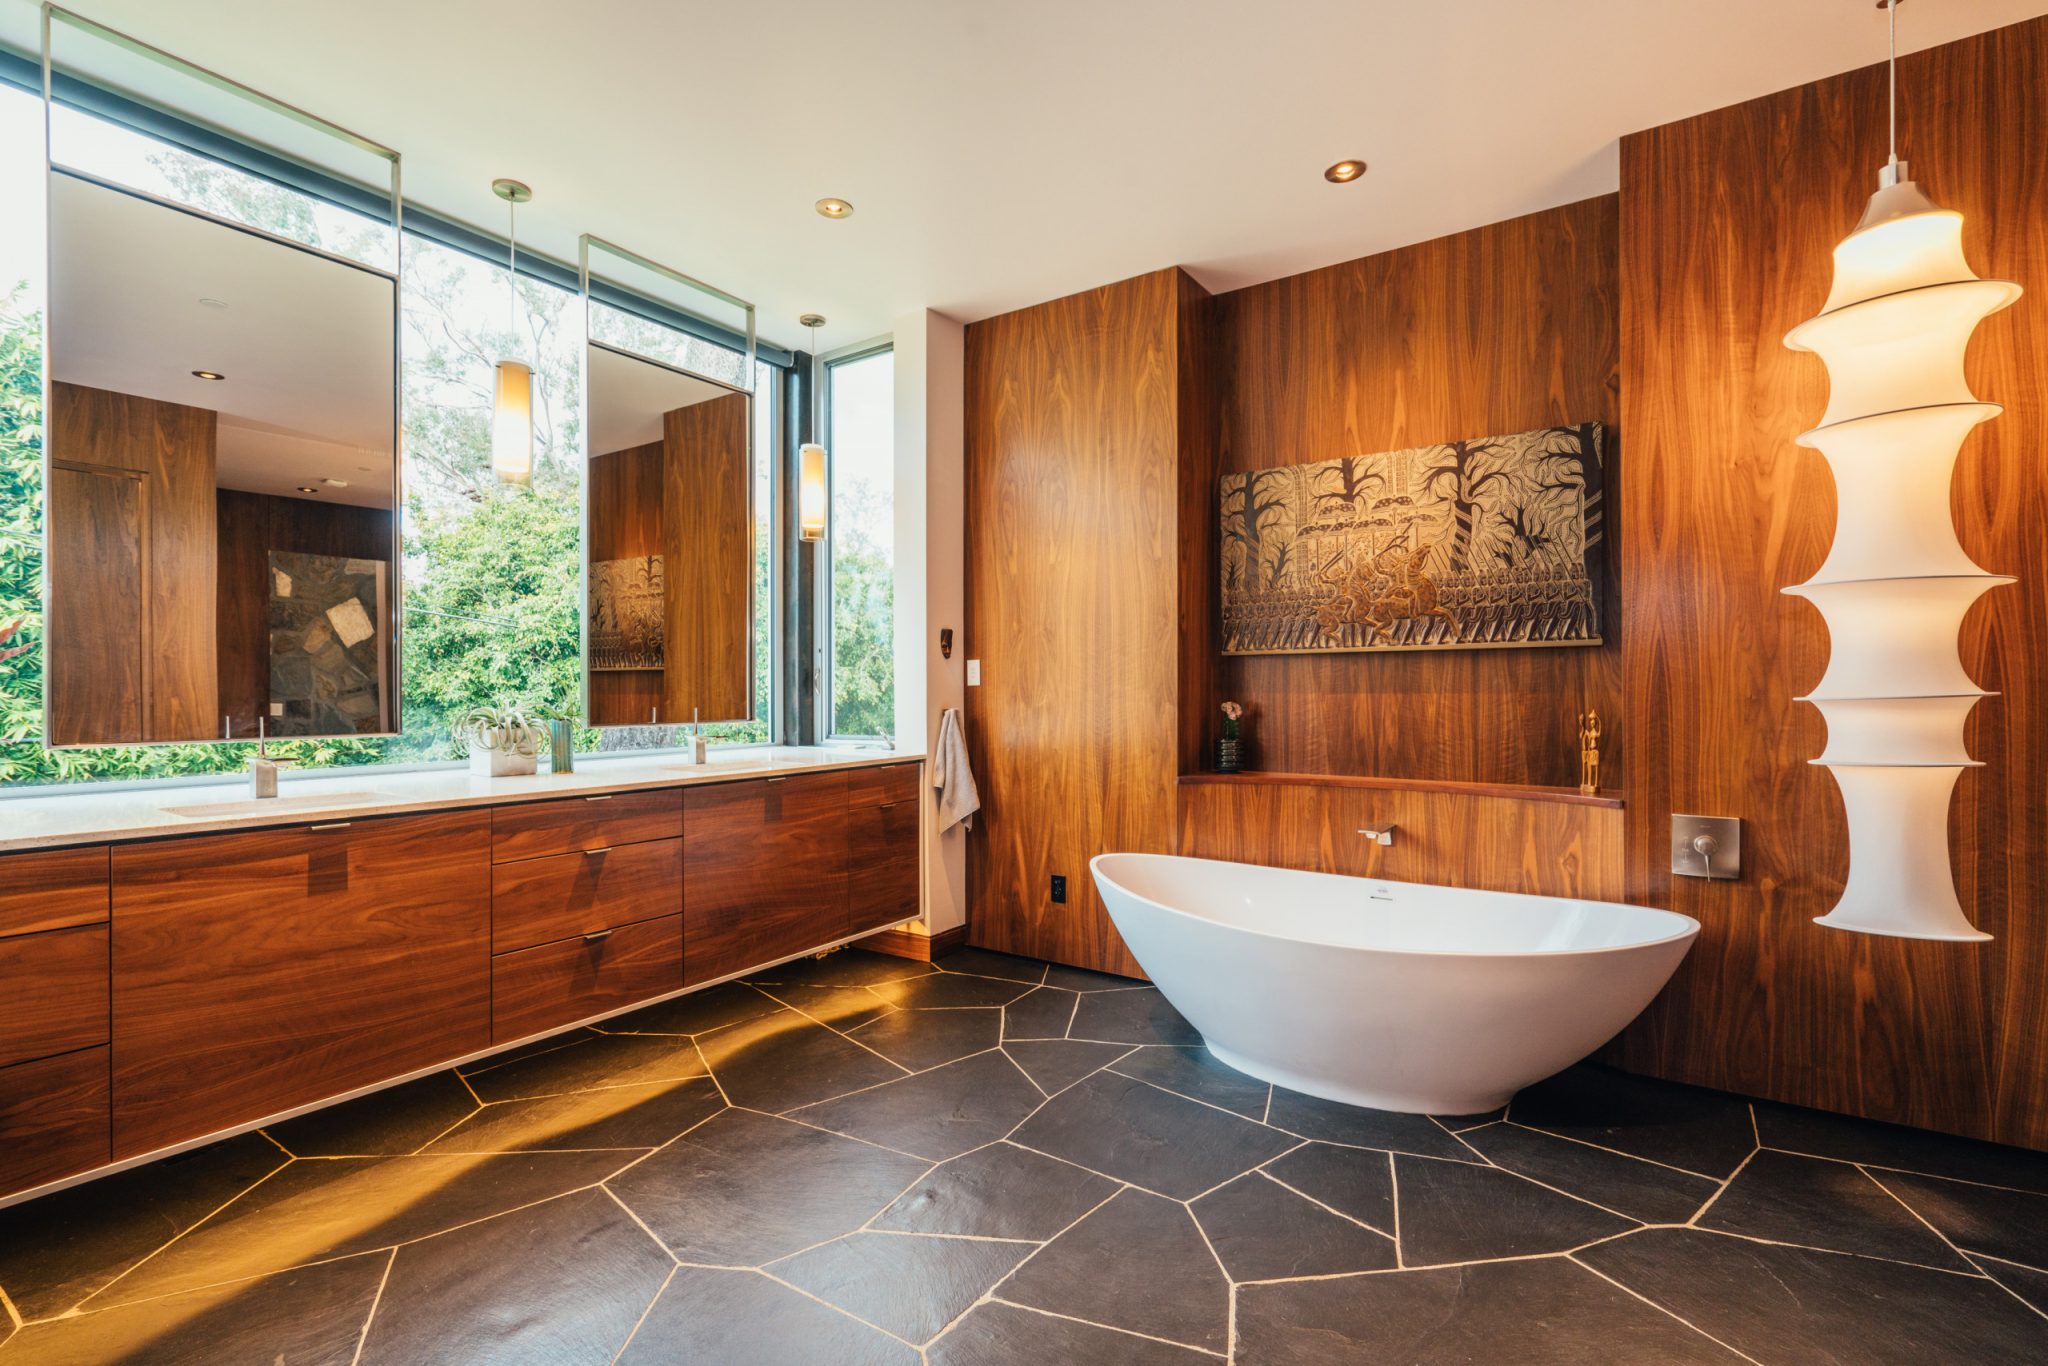 20 Impressive Mid-Century Modern Bathroom Designs You Must See - 20 Impressive MiD Century MoDern Bathroom Designs You Must See 2 2048x1366